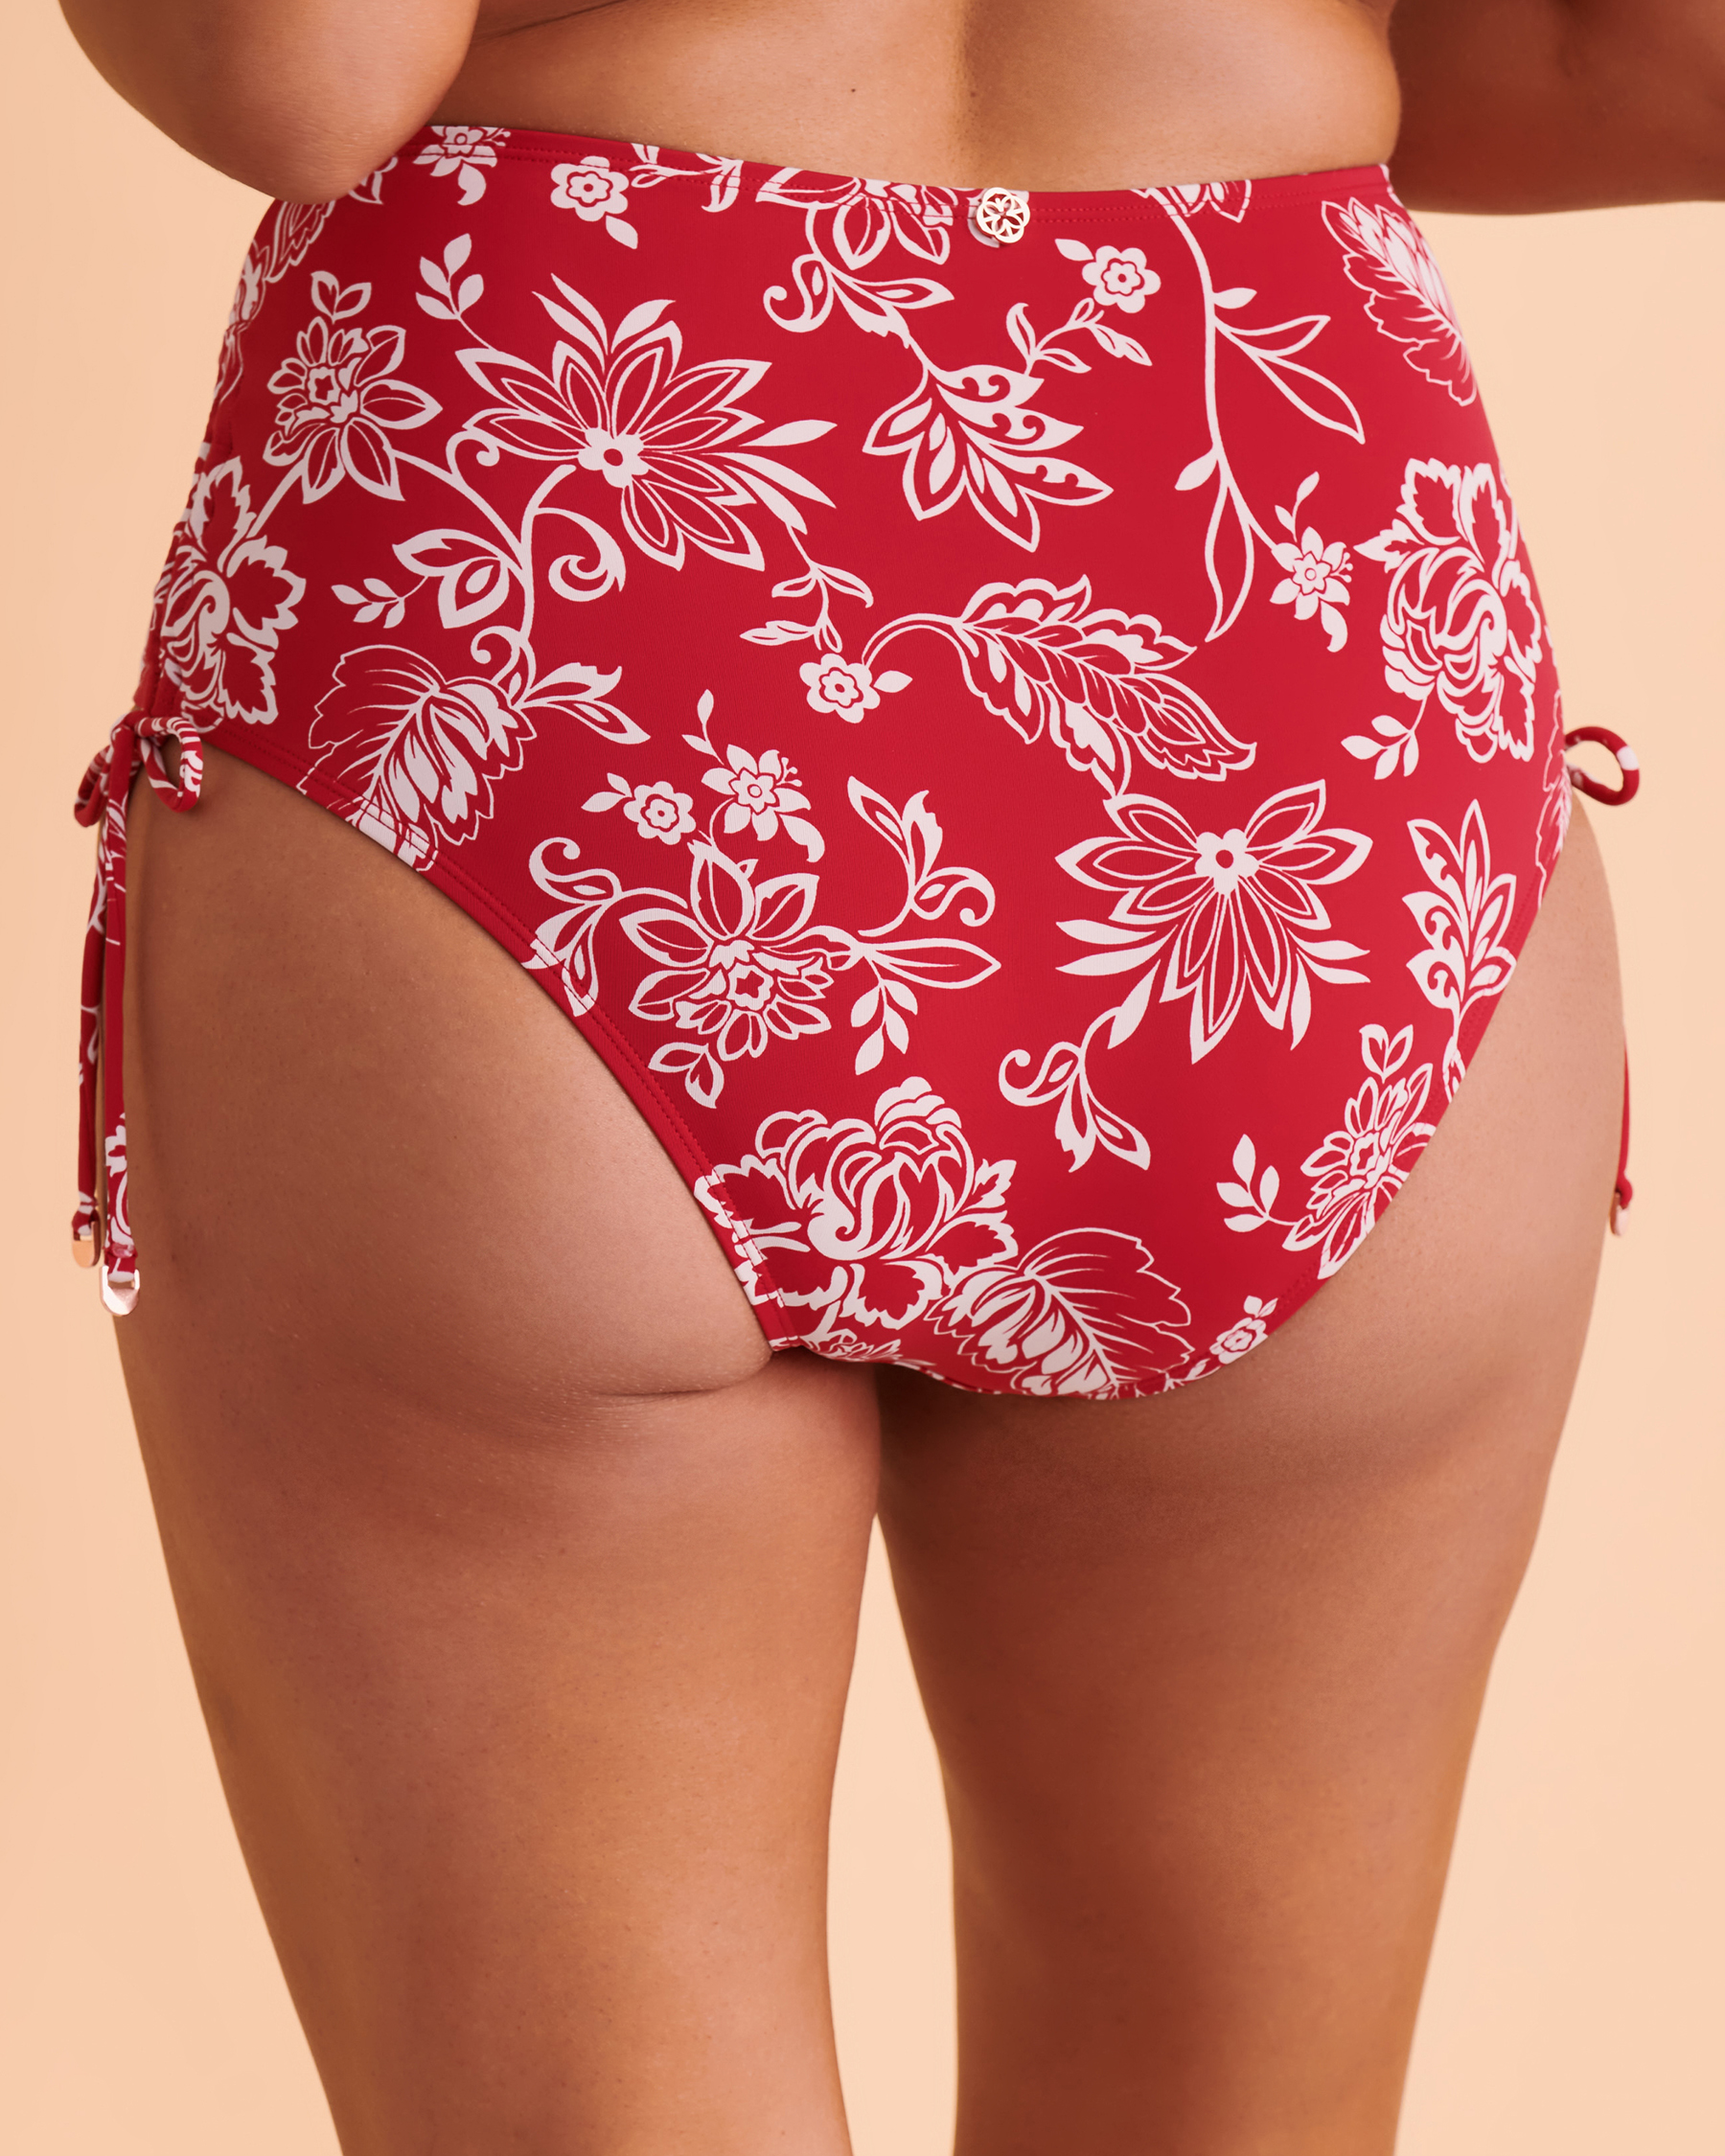 TURQUOISE COUTURE LA DI DA High Waist Bikini Bottom Red floral 01300171 - View5